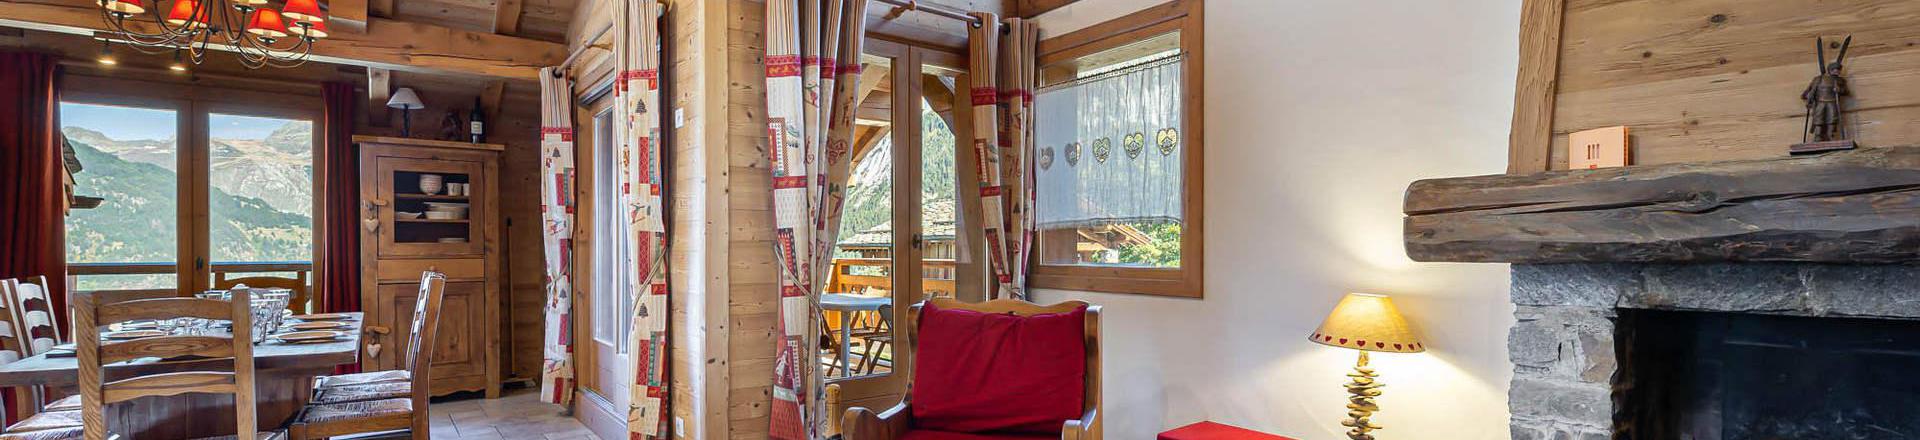 Rent in ski resort 6 room chalet 8 people - Chalet Daï - Courchevel - Living room